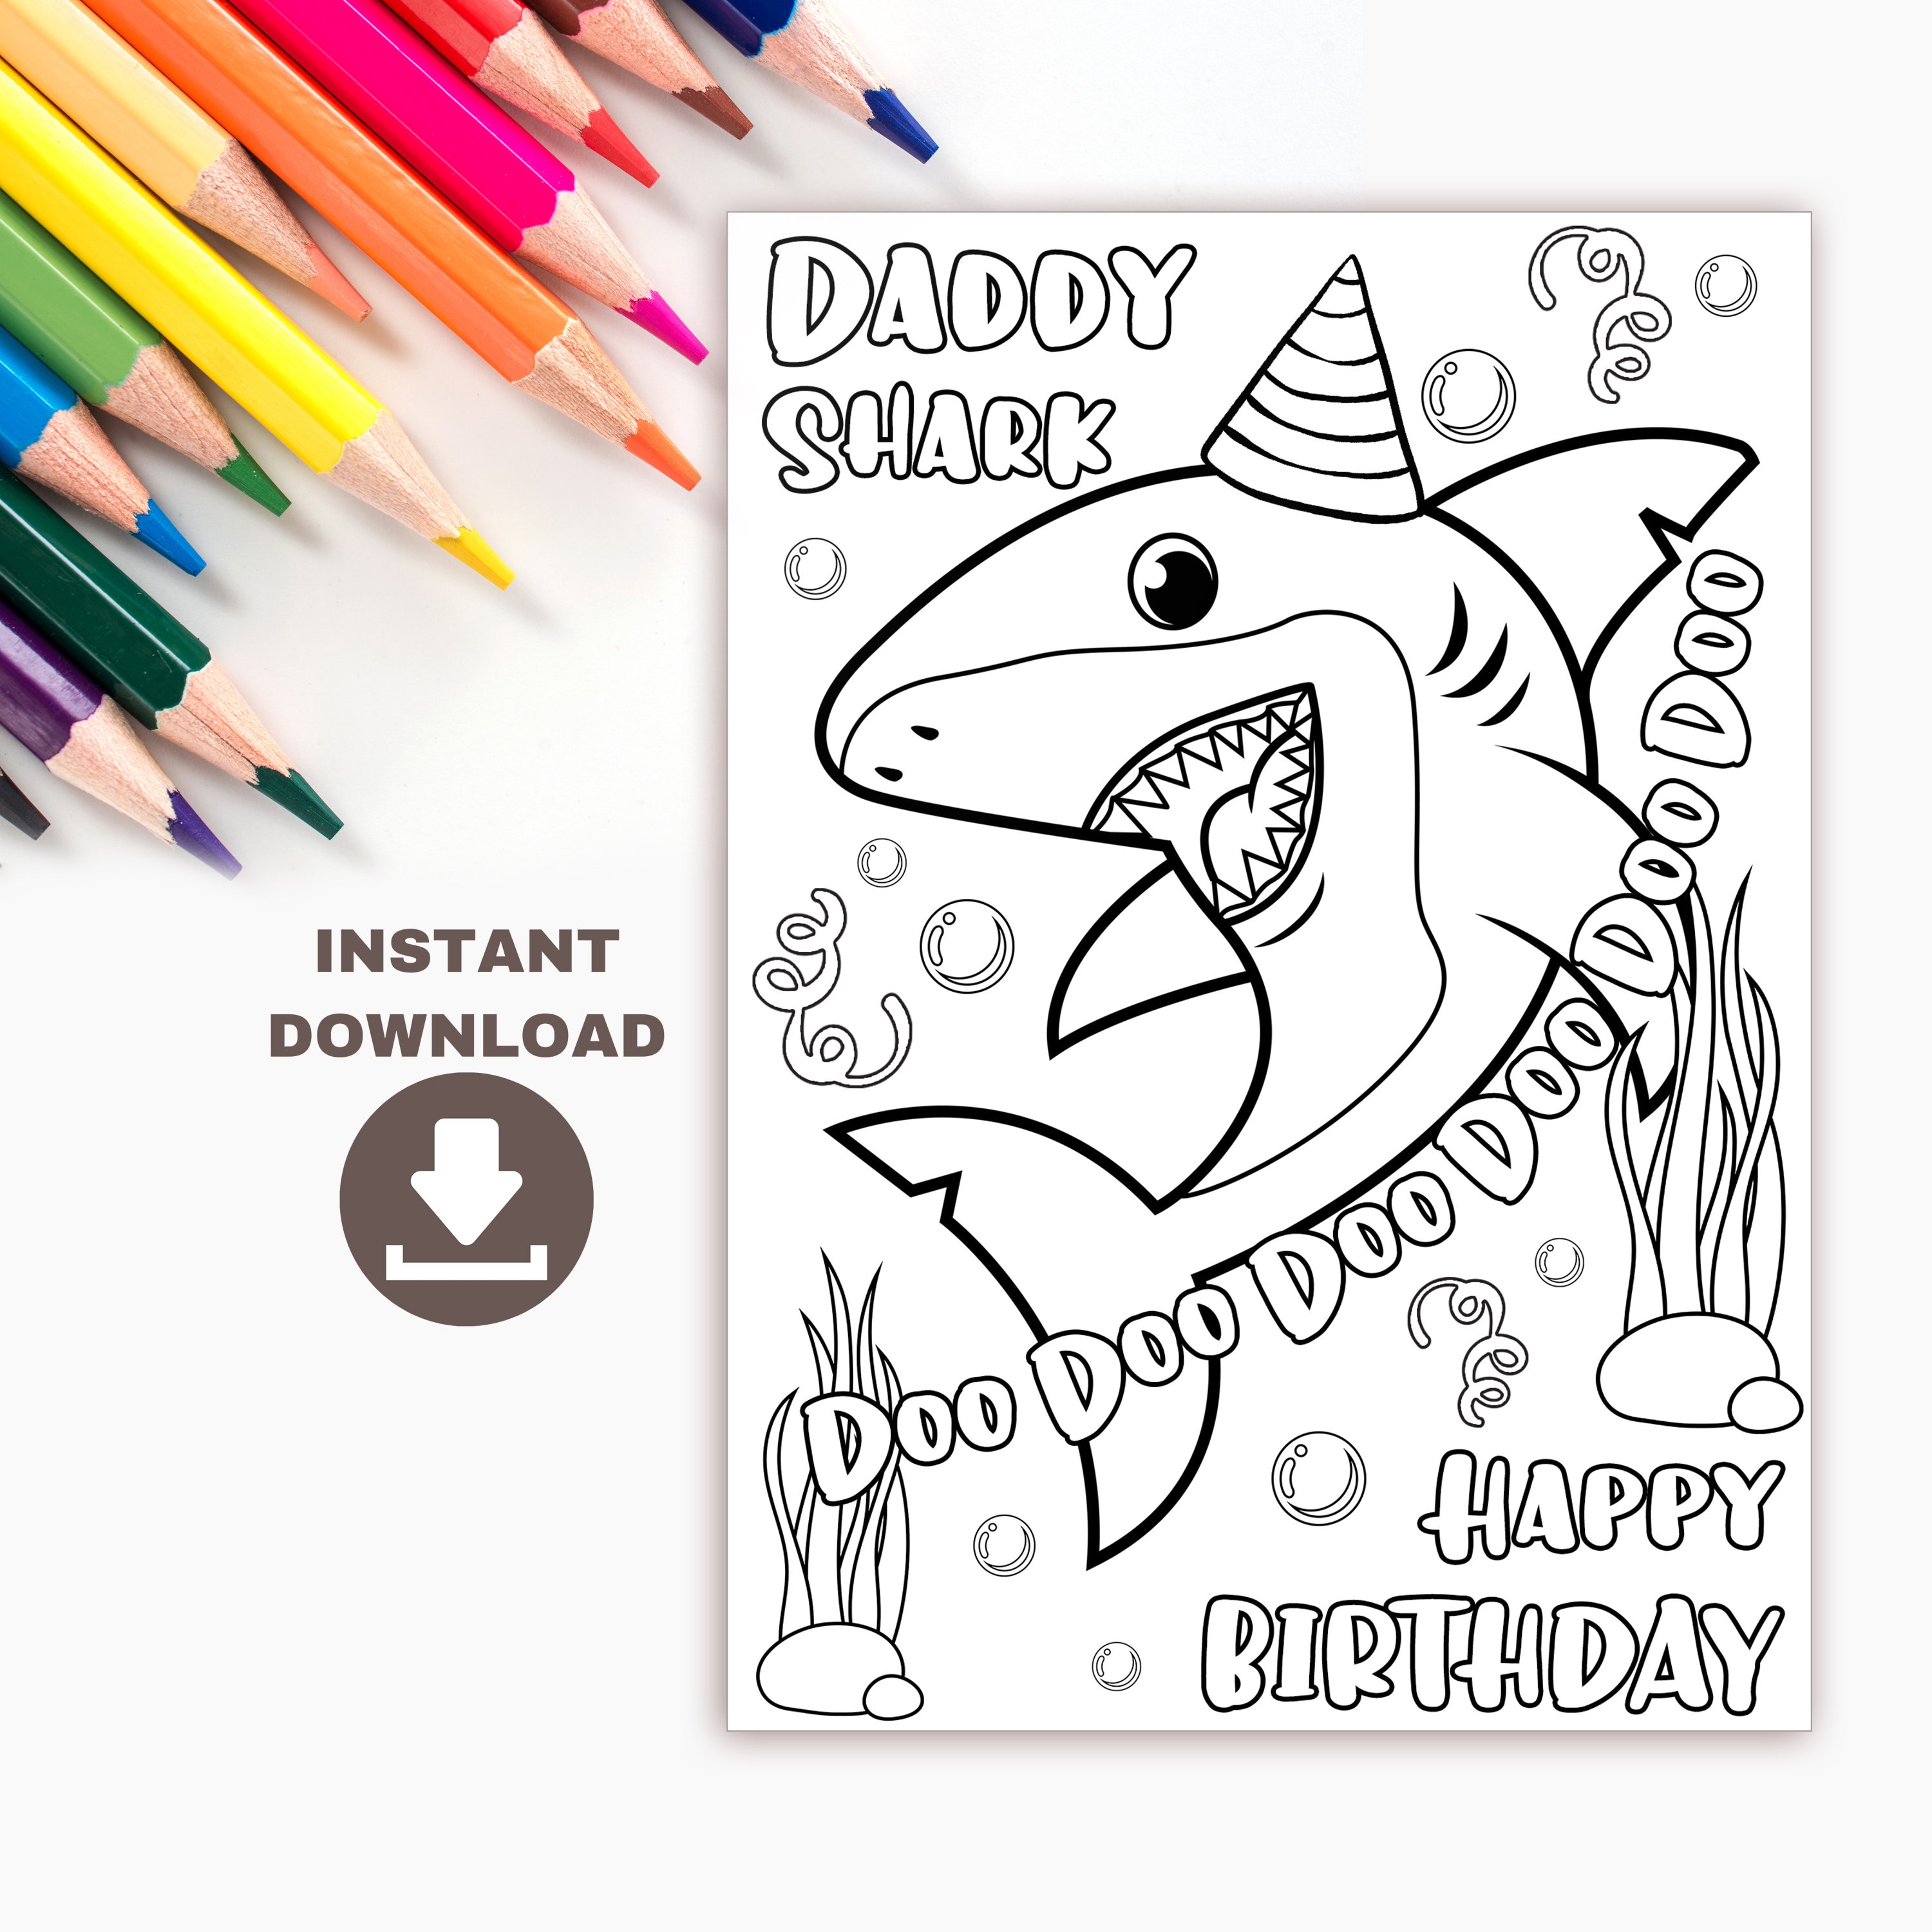 Daddy shark printable birthday coloring card for kids funny diy birthday card for dad digital download coloring page for dad birthday